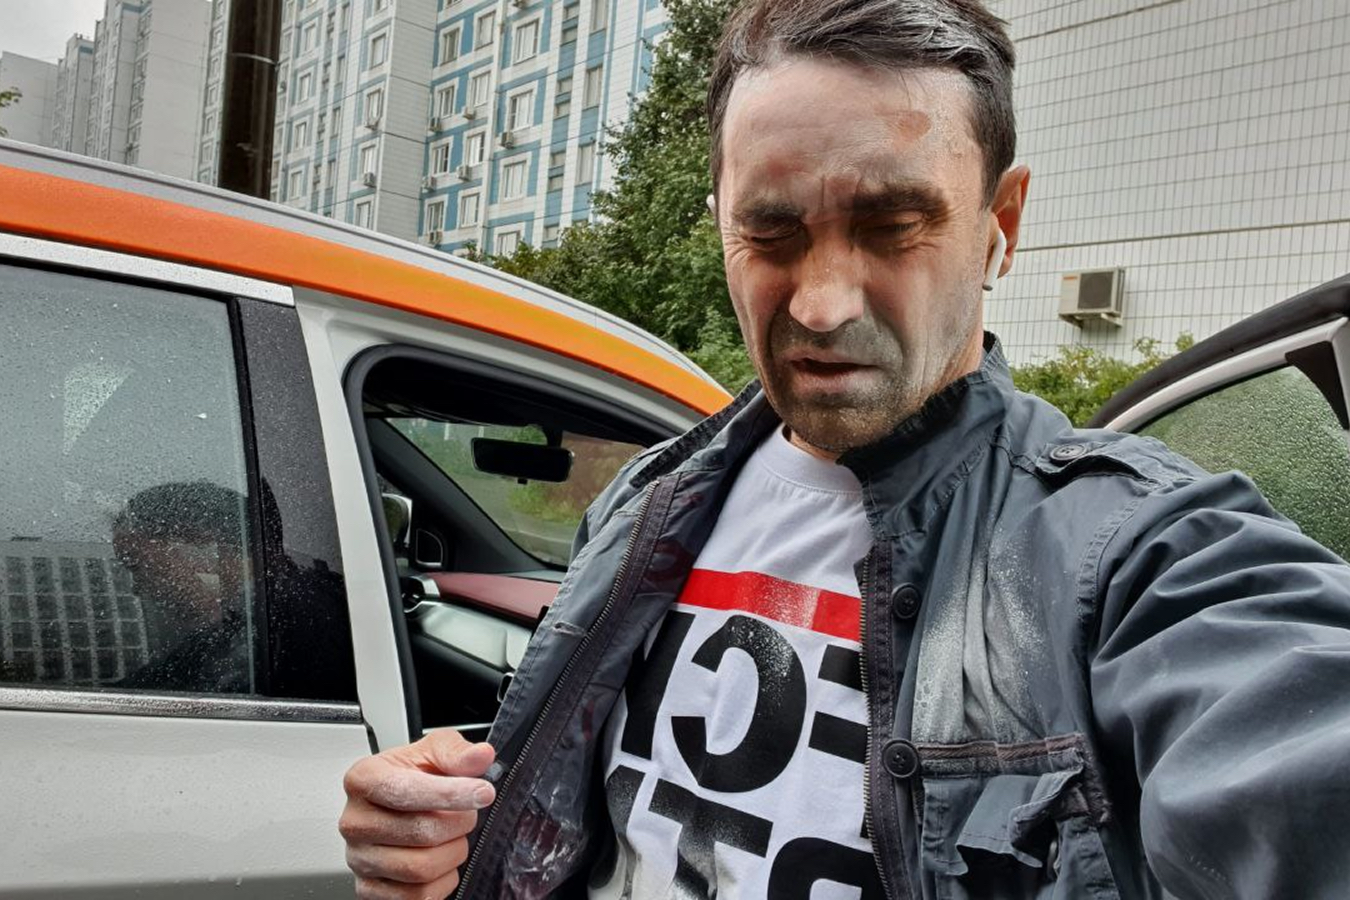 Activist Andrei Chernyshov after the assault, September 18, 2022 / Photo provided by Chernyshov